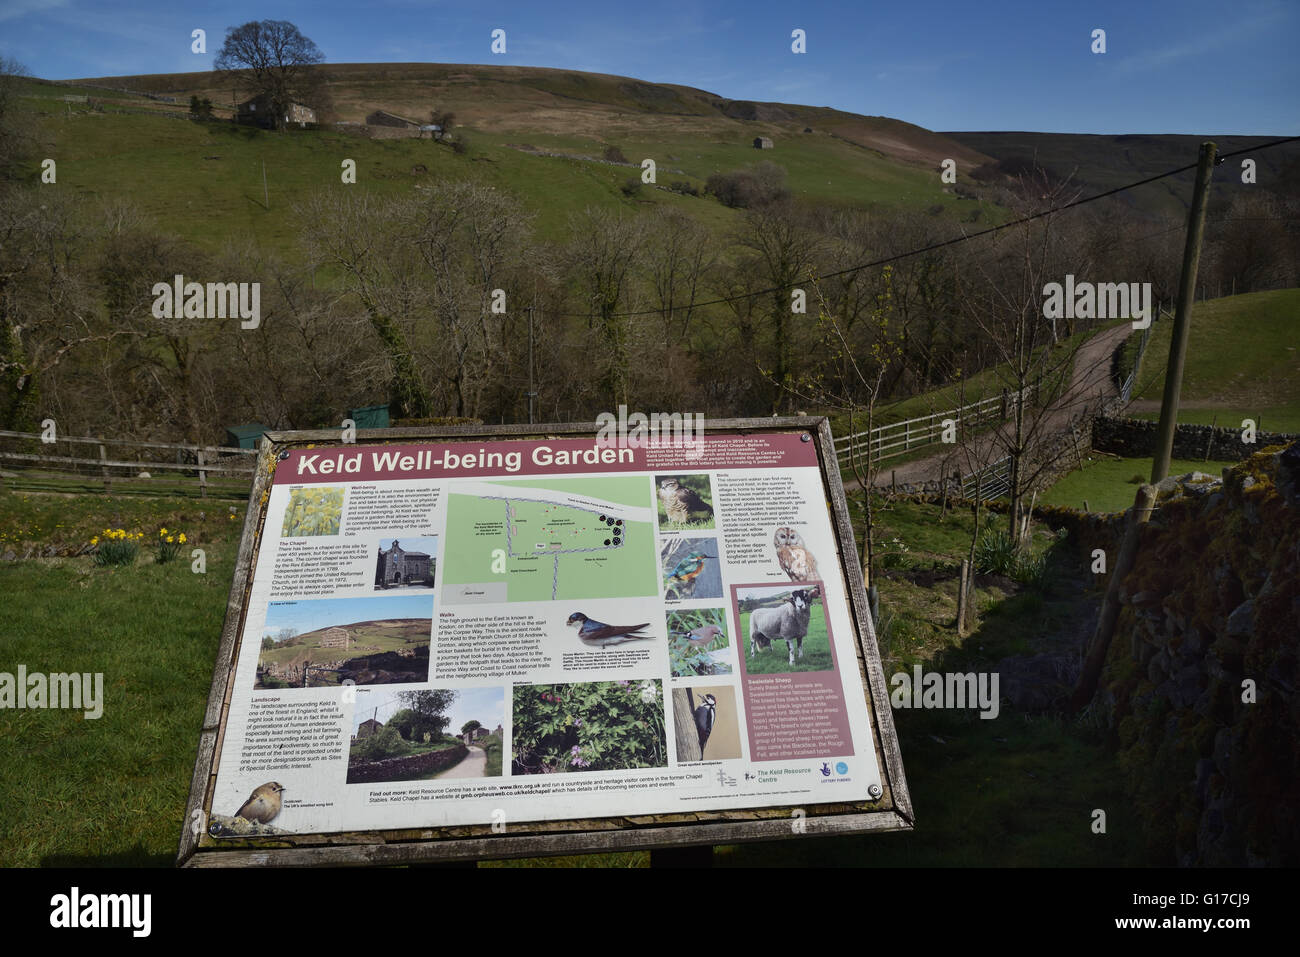 Keld bienestar Jardín information board, Swaledale, Yorkshire Dales National Park, North Yorkshire, Inglaterra, Reino Unido. Foto de stock